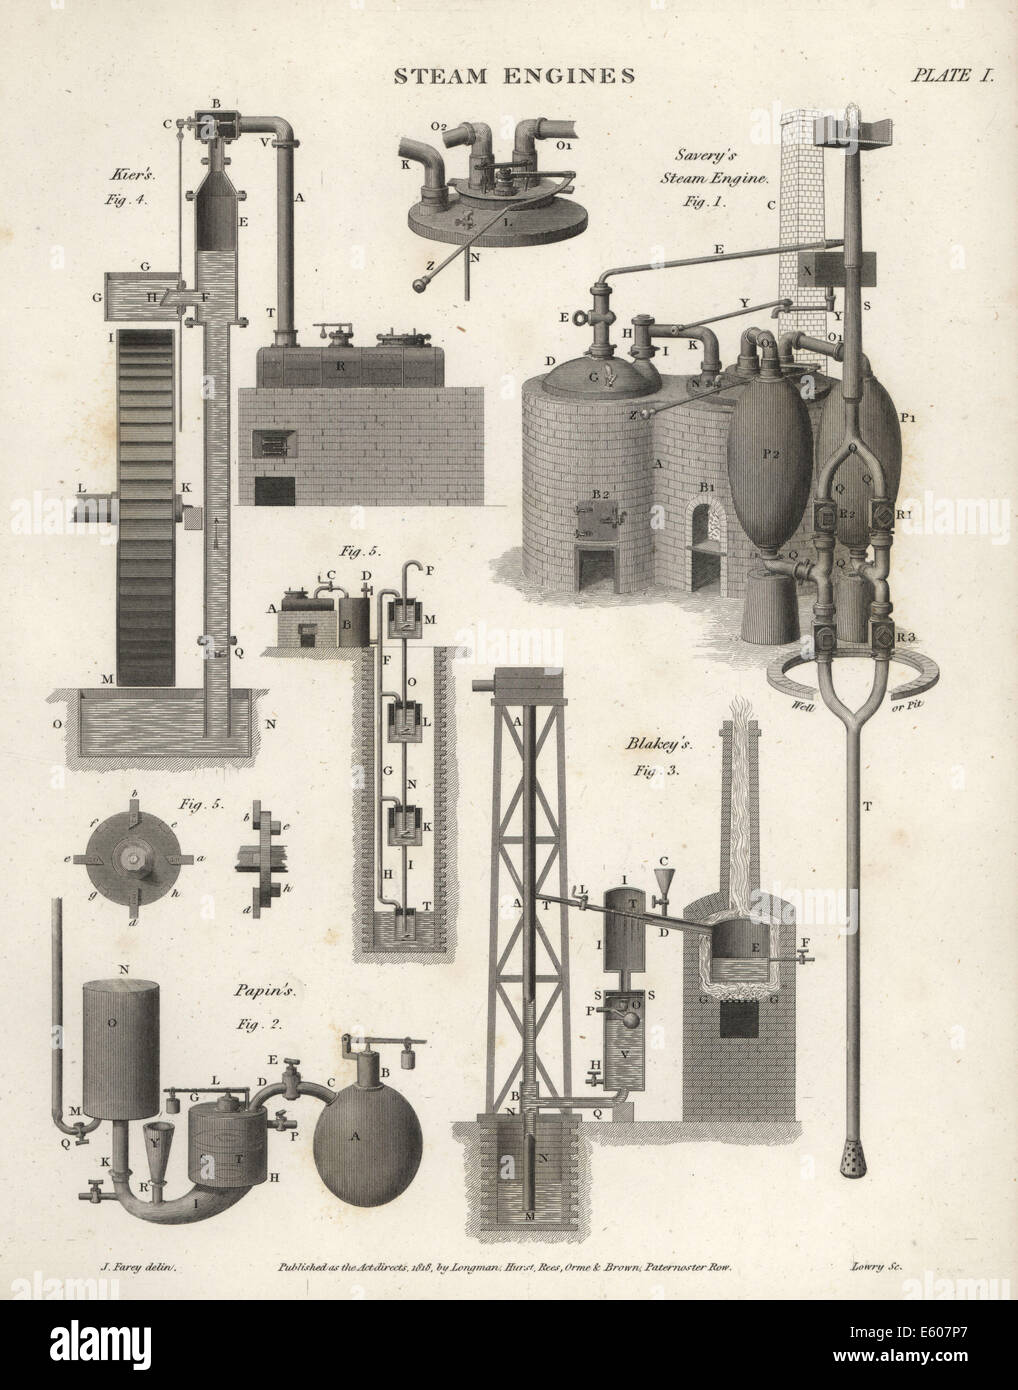 Steam engines by Thomas Savery, William Blakey, Mr Kier, and Denis Papin. Stock Photo